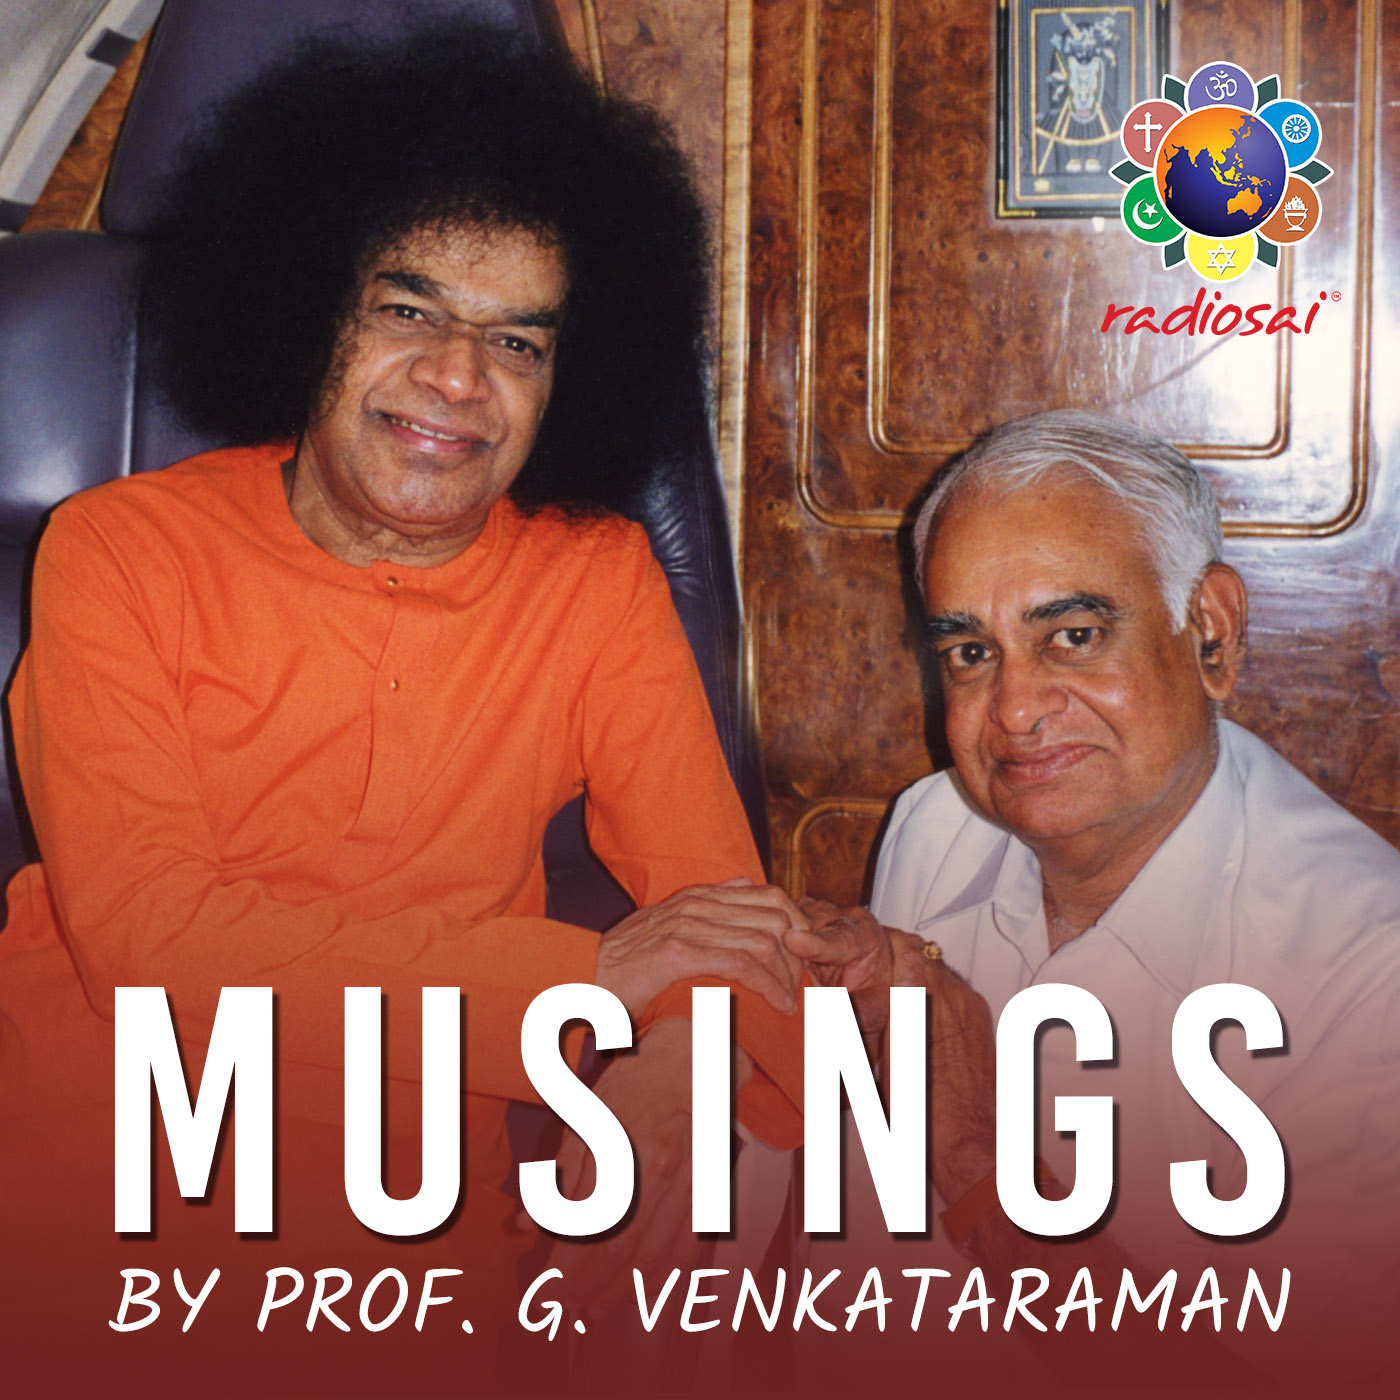 Musings by Prof. G. Venkataraman